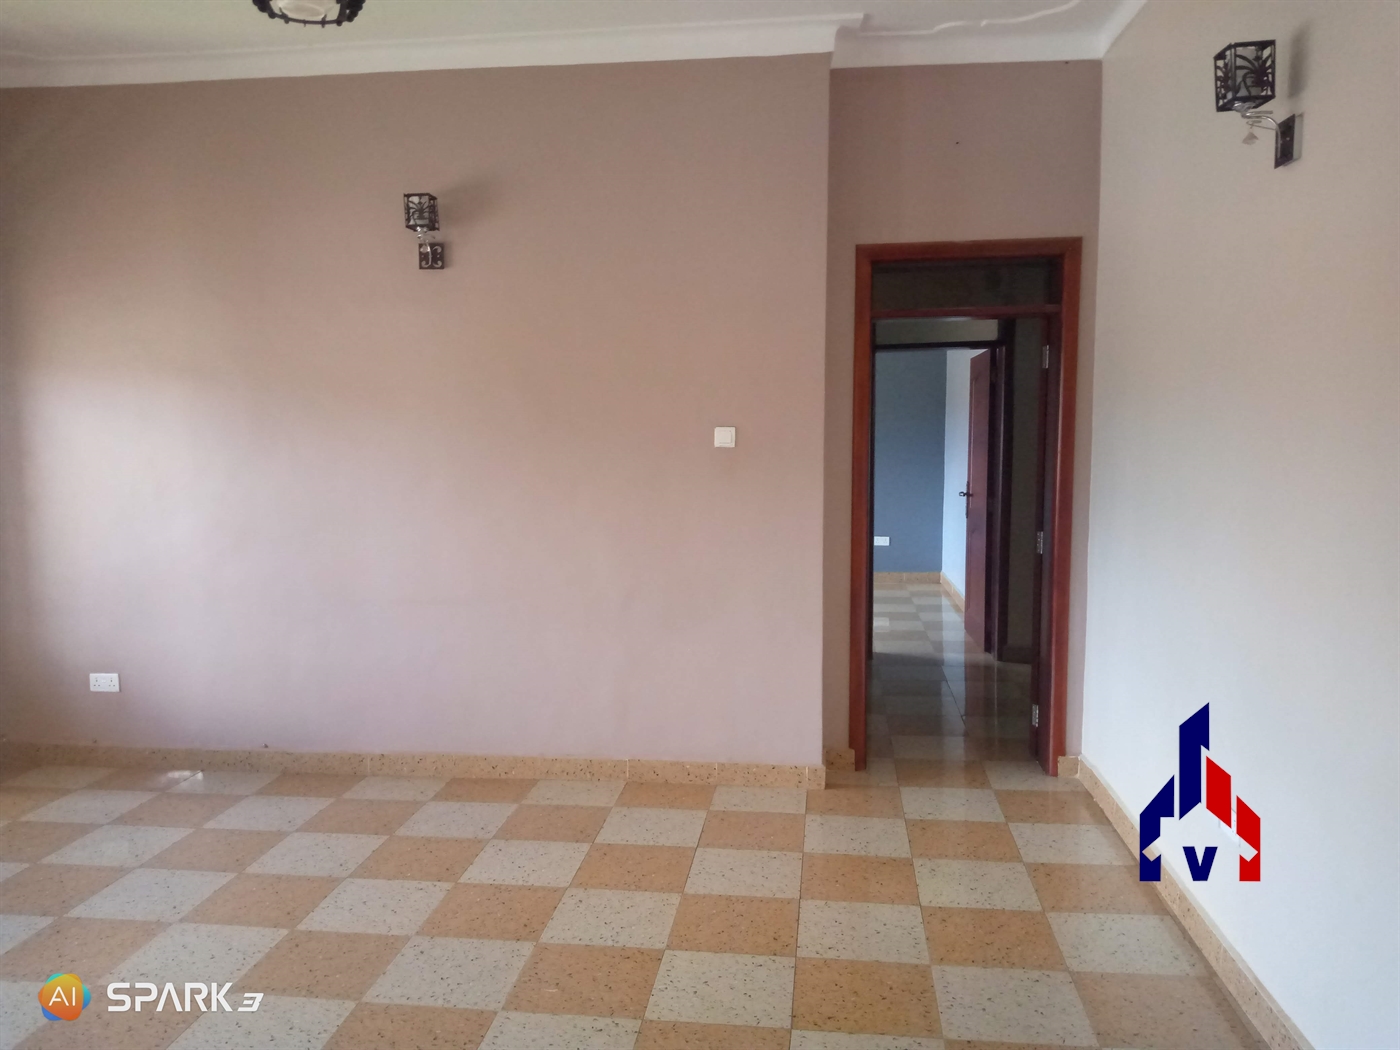 Apartment for rent in Bbunga Kampala